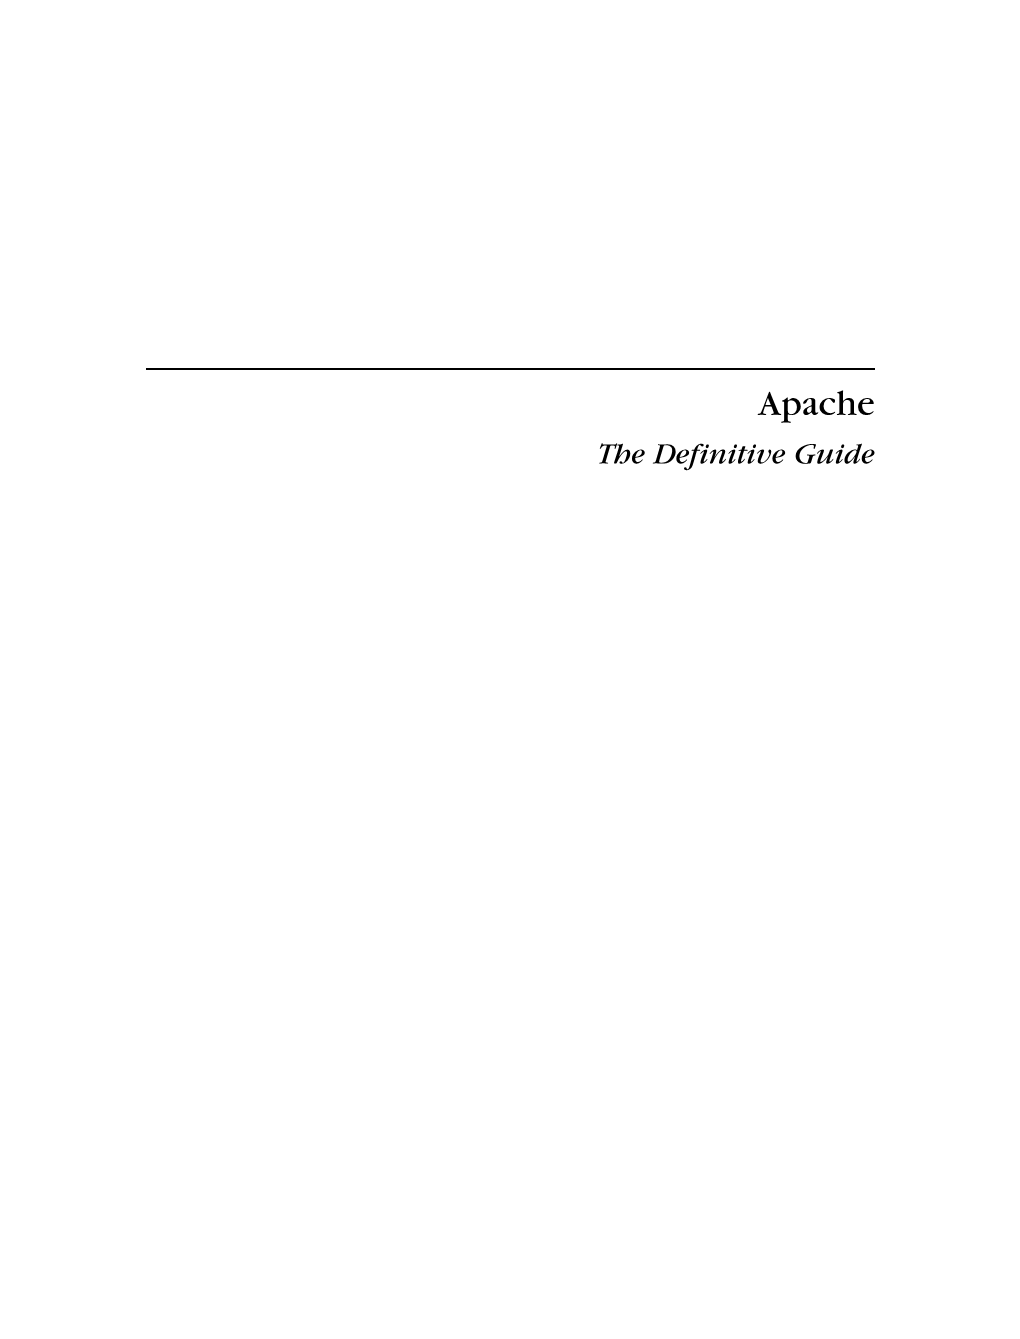 Apache the Definitive Guide